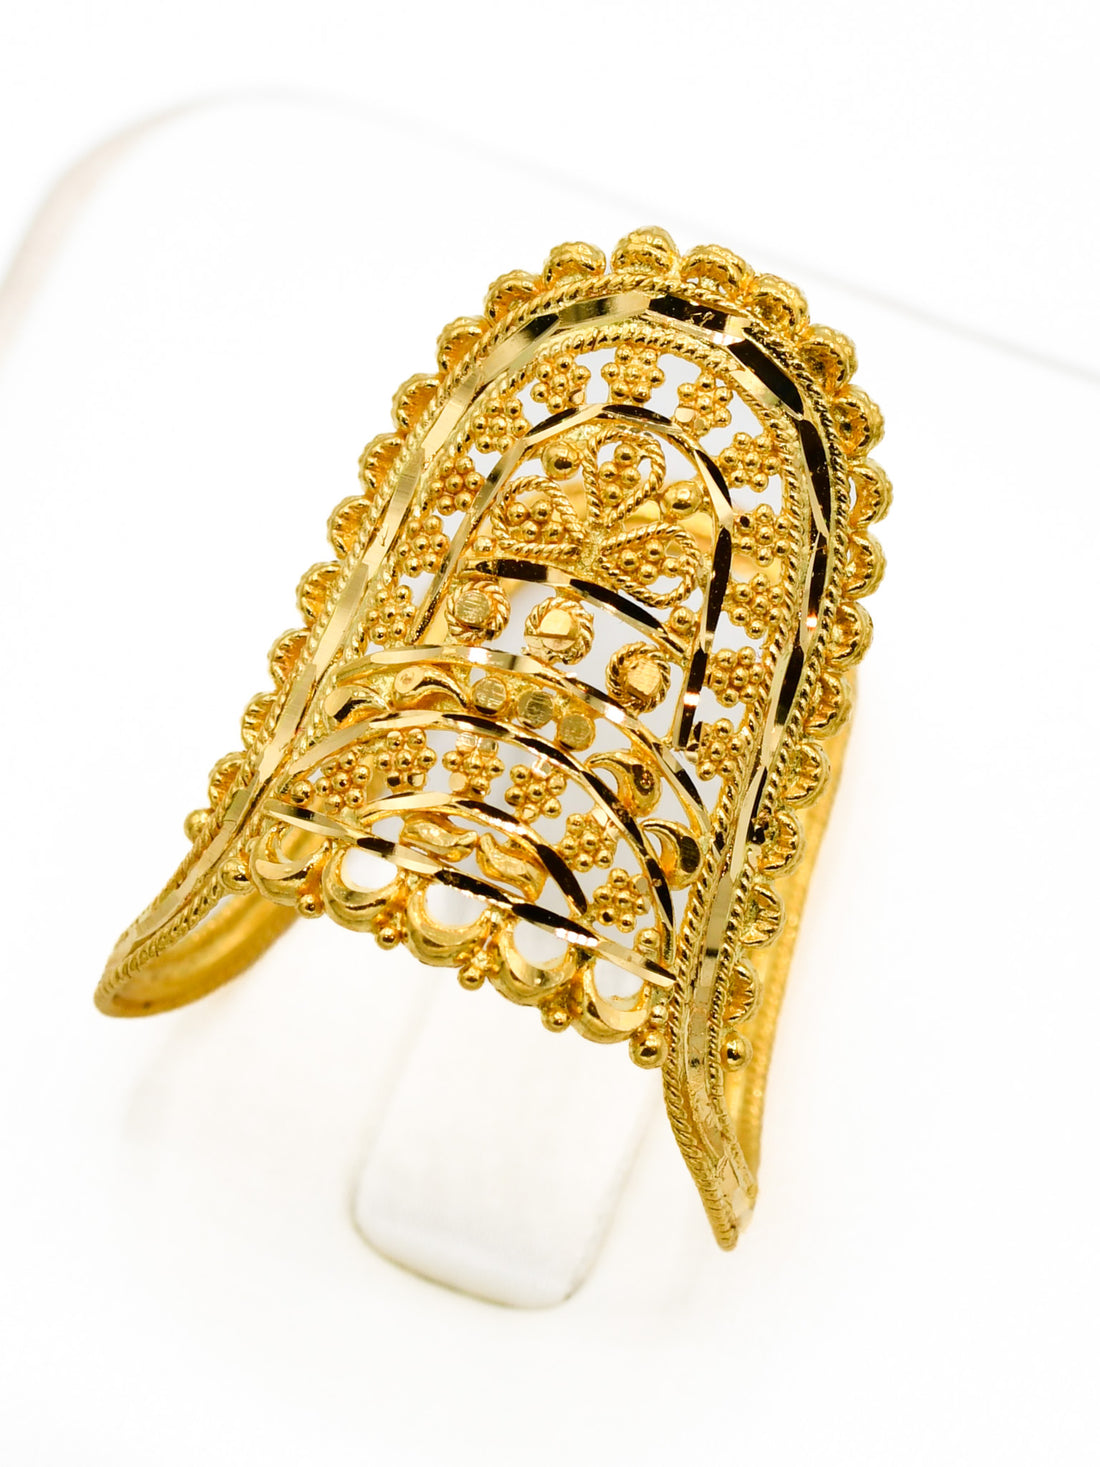 22ct Gold Filigree Ladies Ring - Roop Darshan